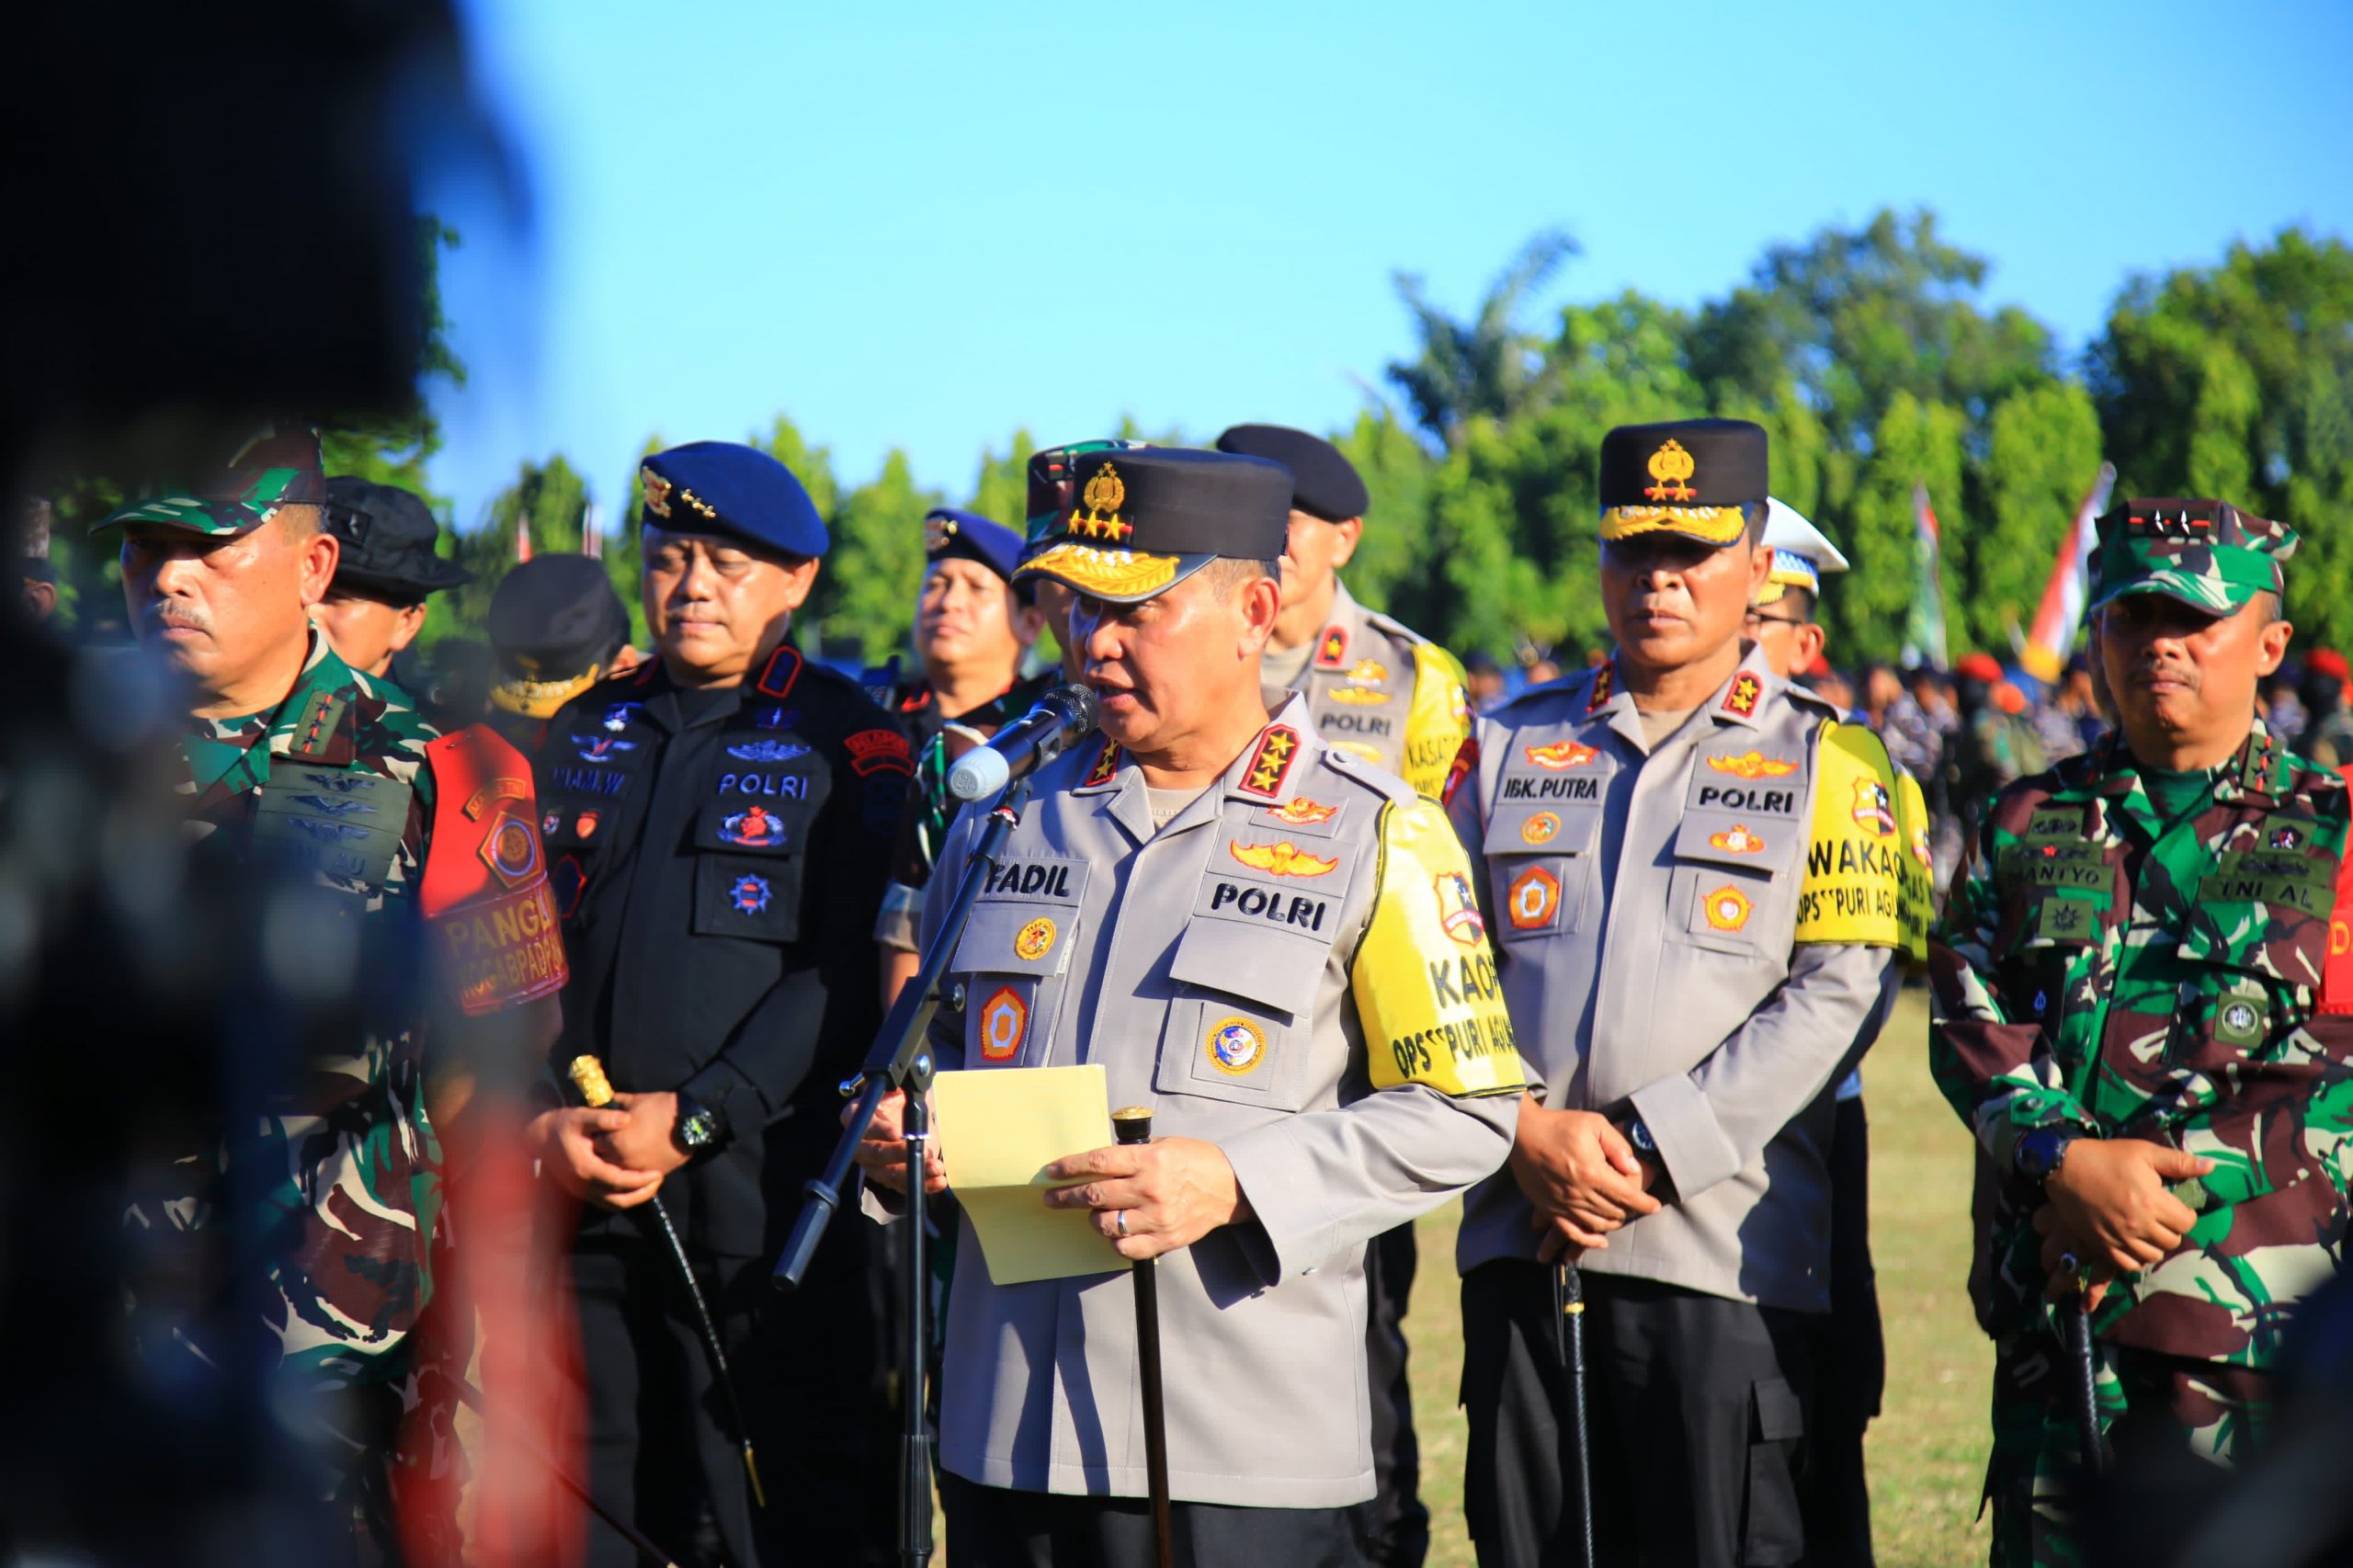 TNI-Polri Gelar Apel Pasukan Pengamanan World Water Forum Ke-10 di Bali